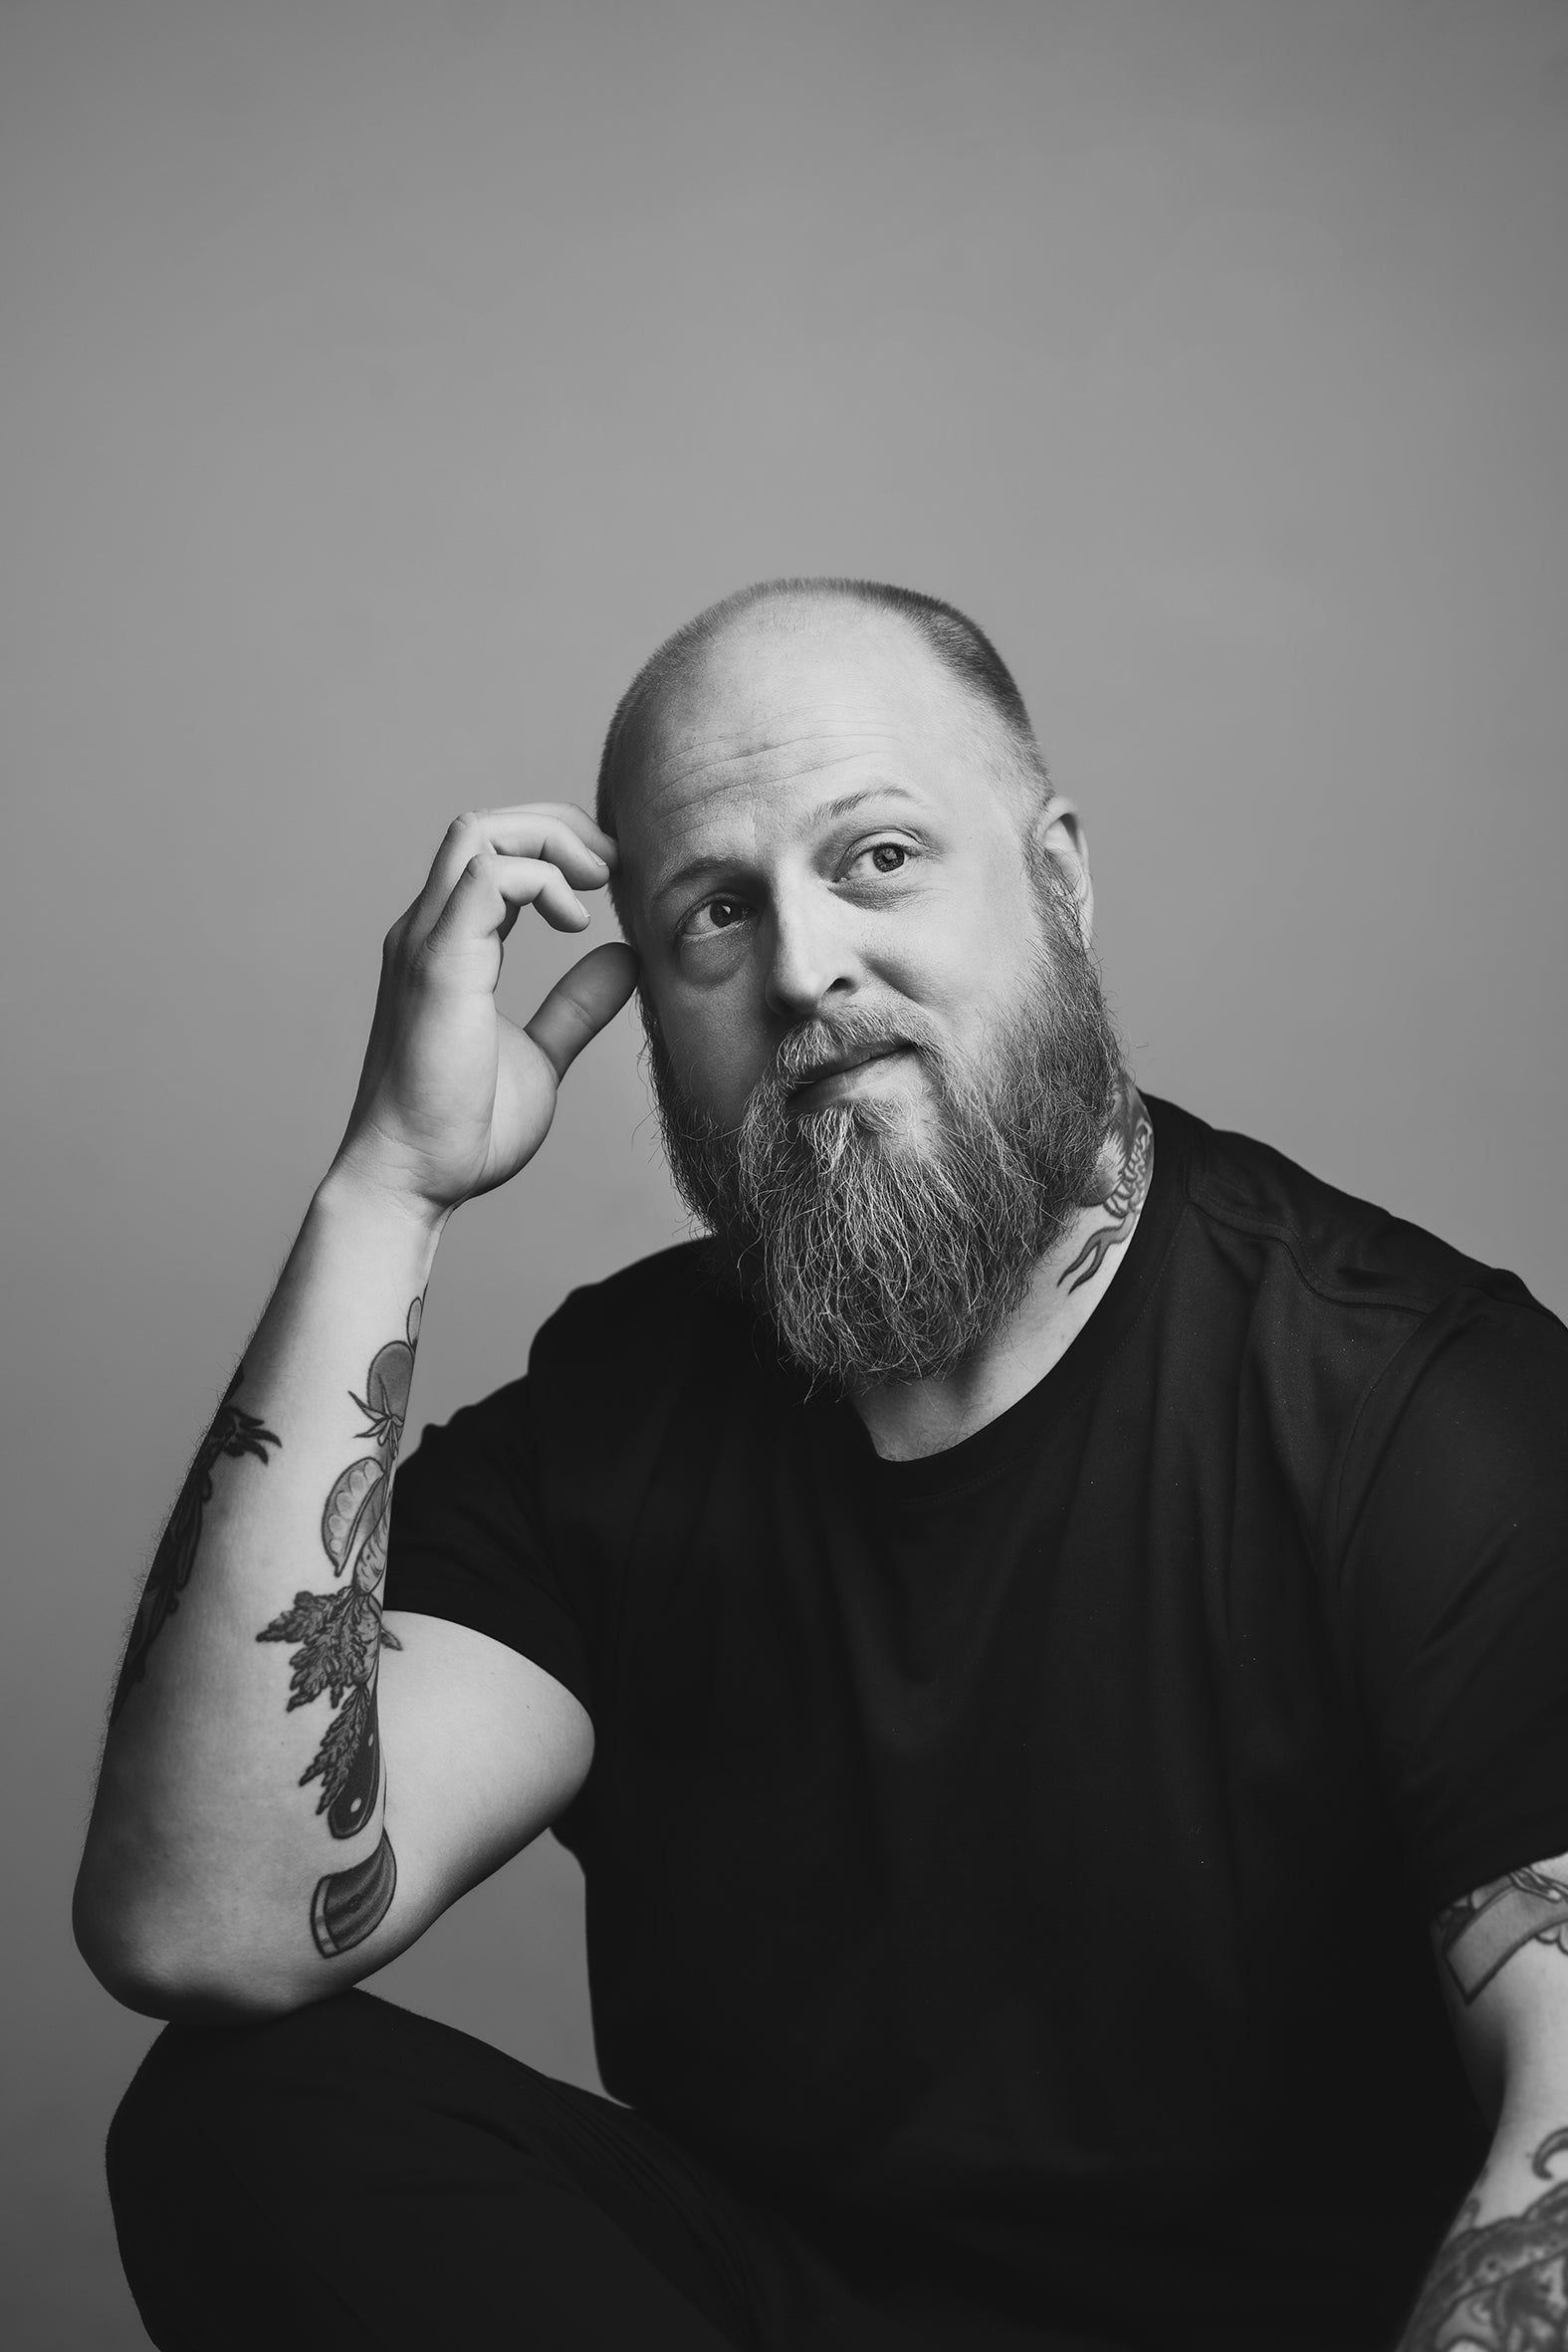 Series Artist: Björn Öberg